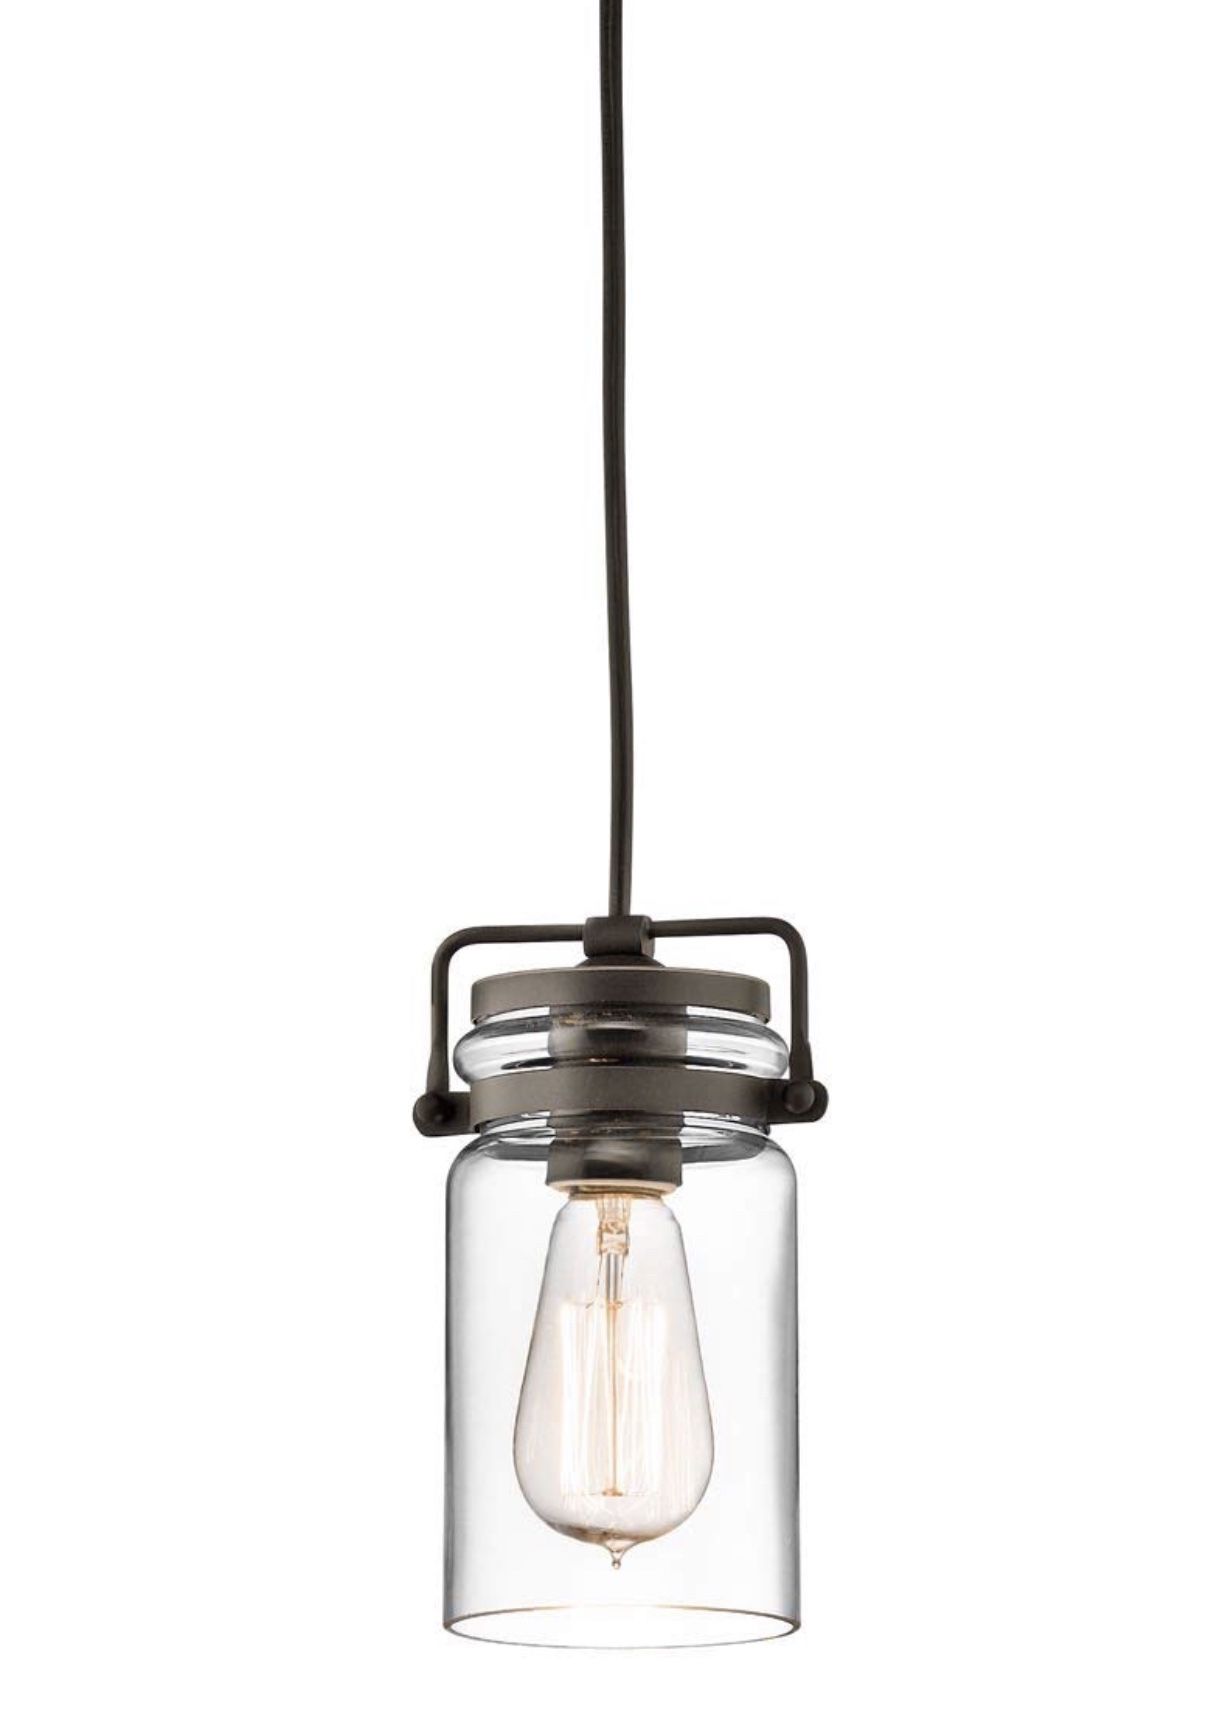 Kichler Canning Jar pendant lights (never used) Qty: 3